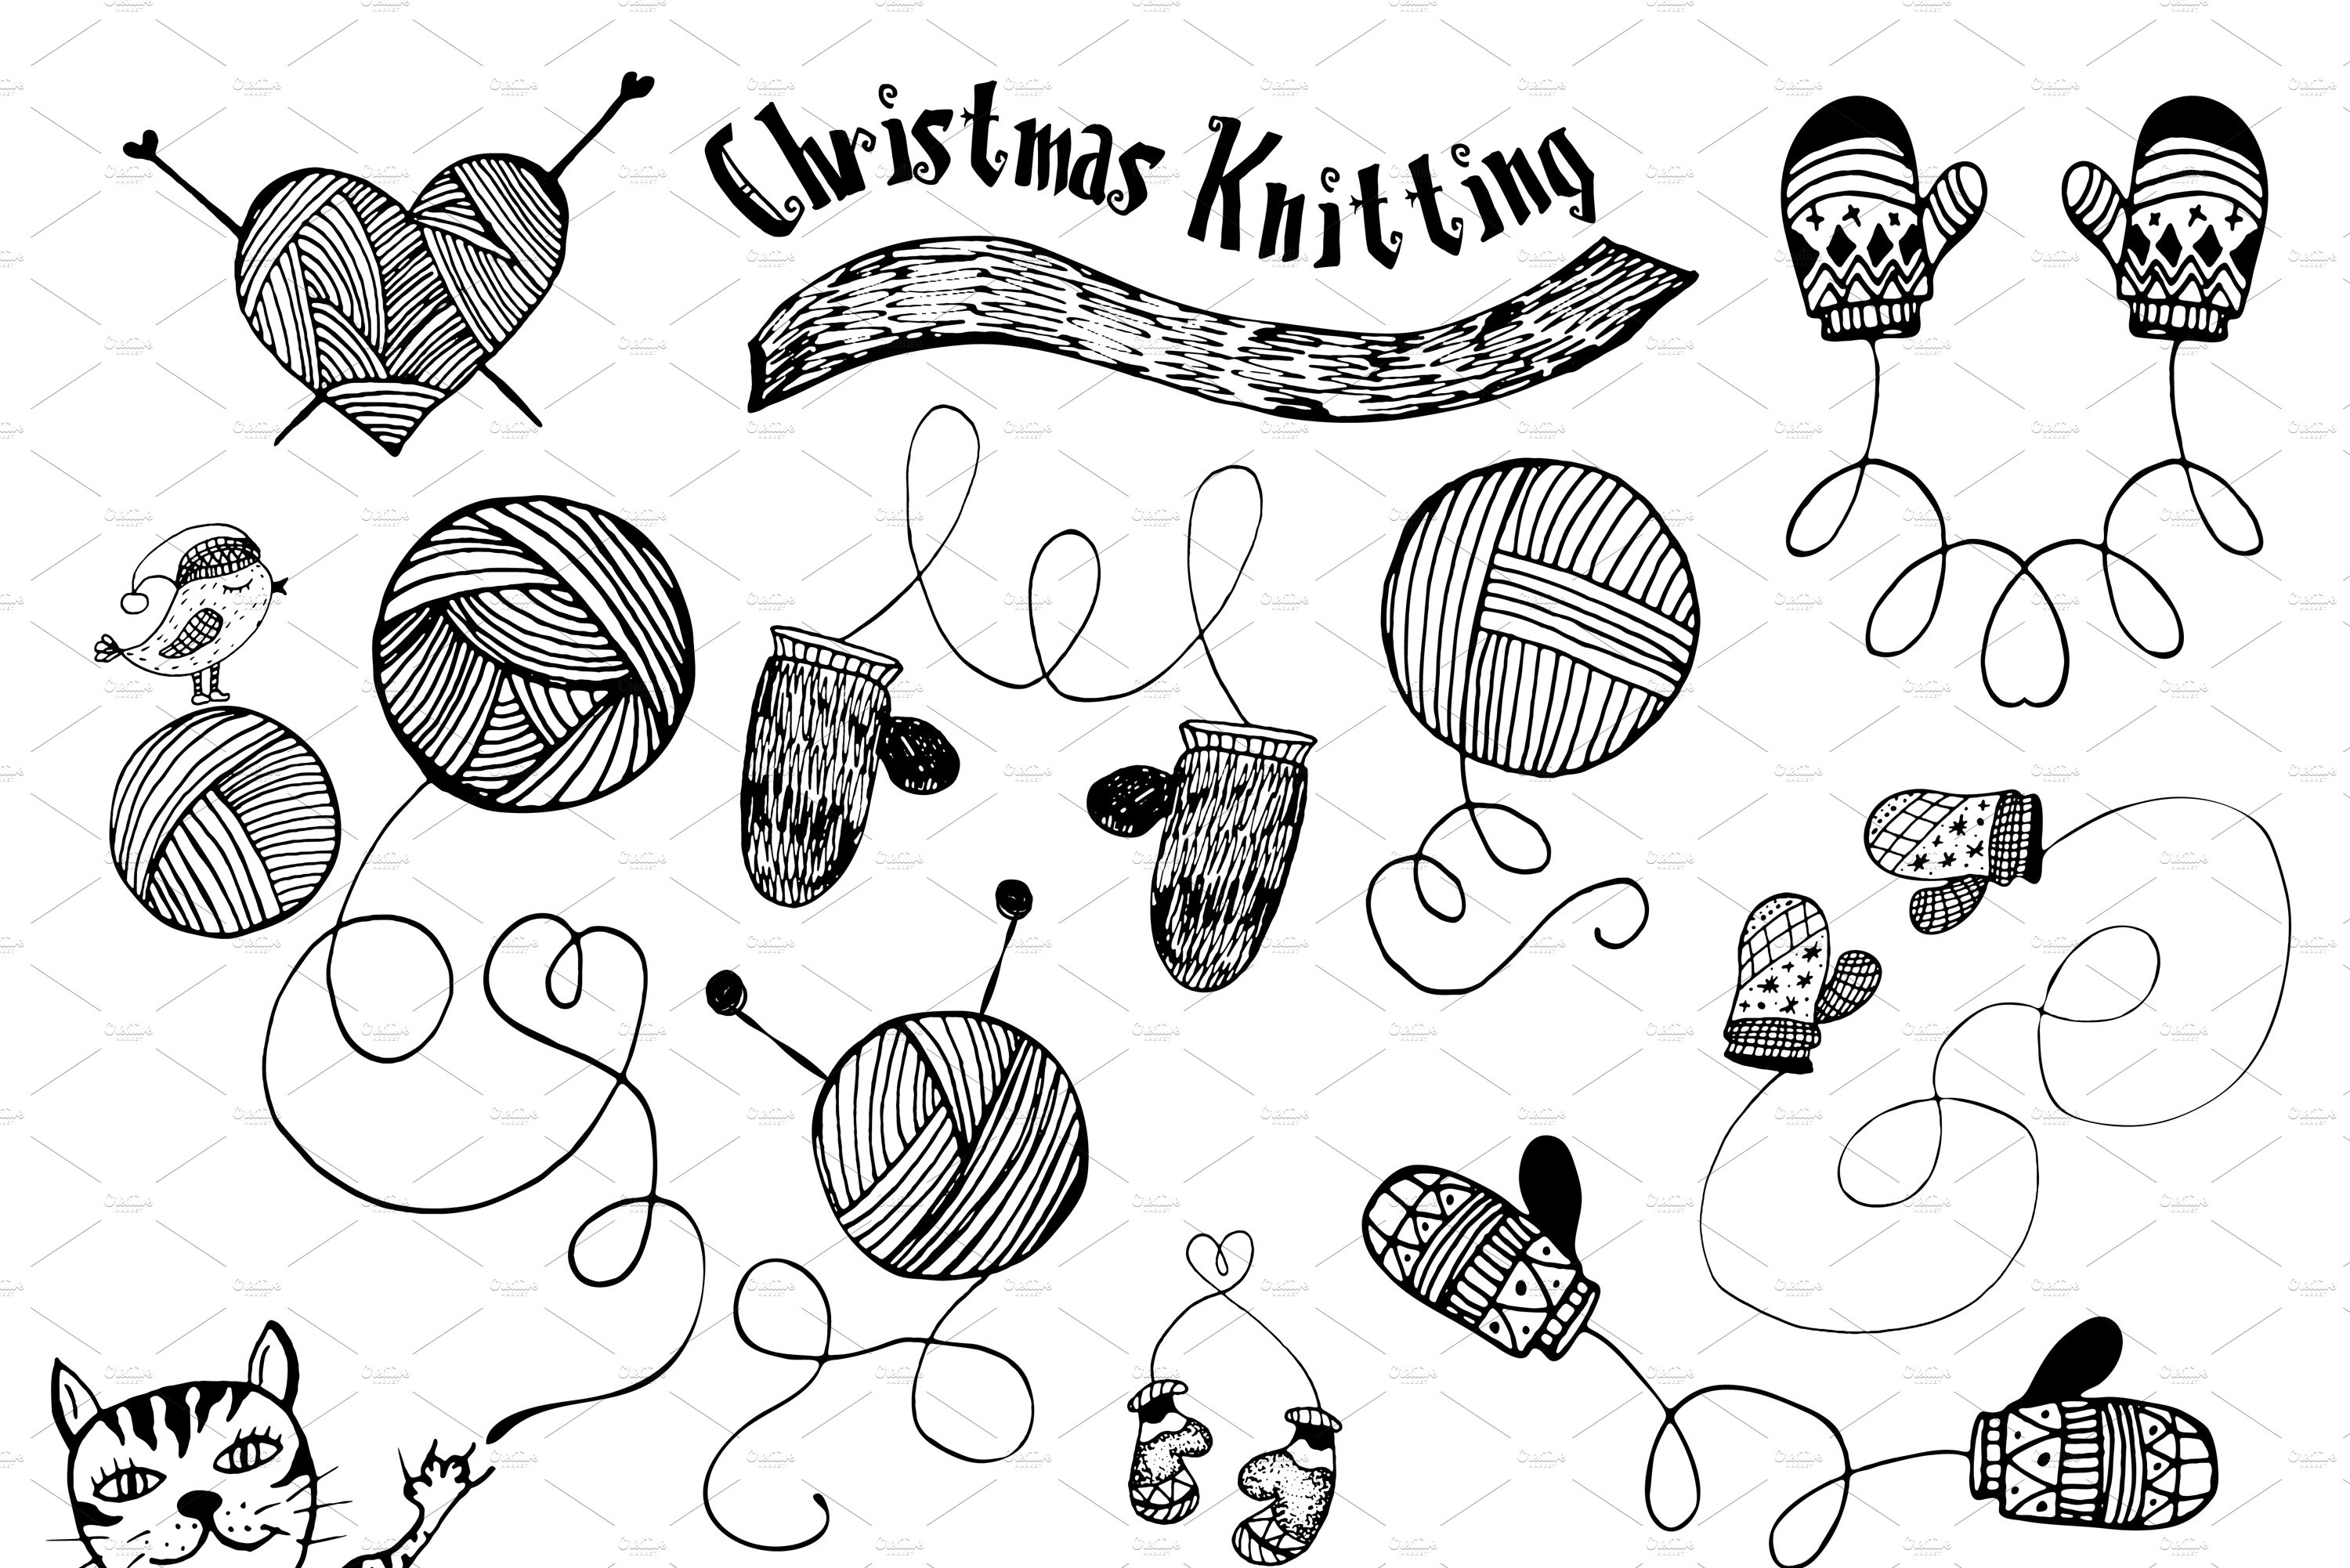 Christmas knitting illustrations.